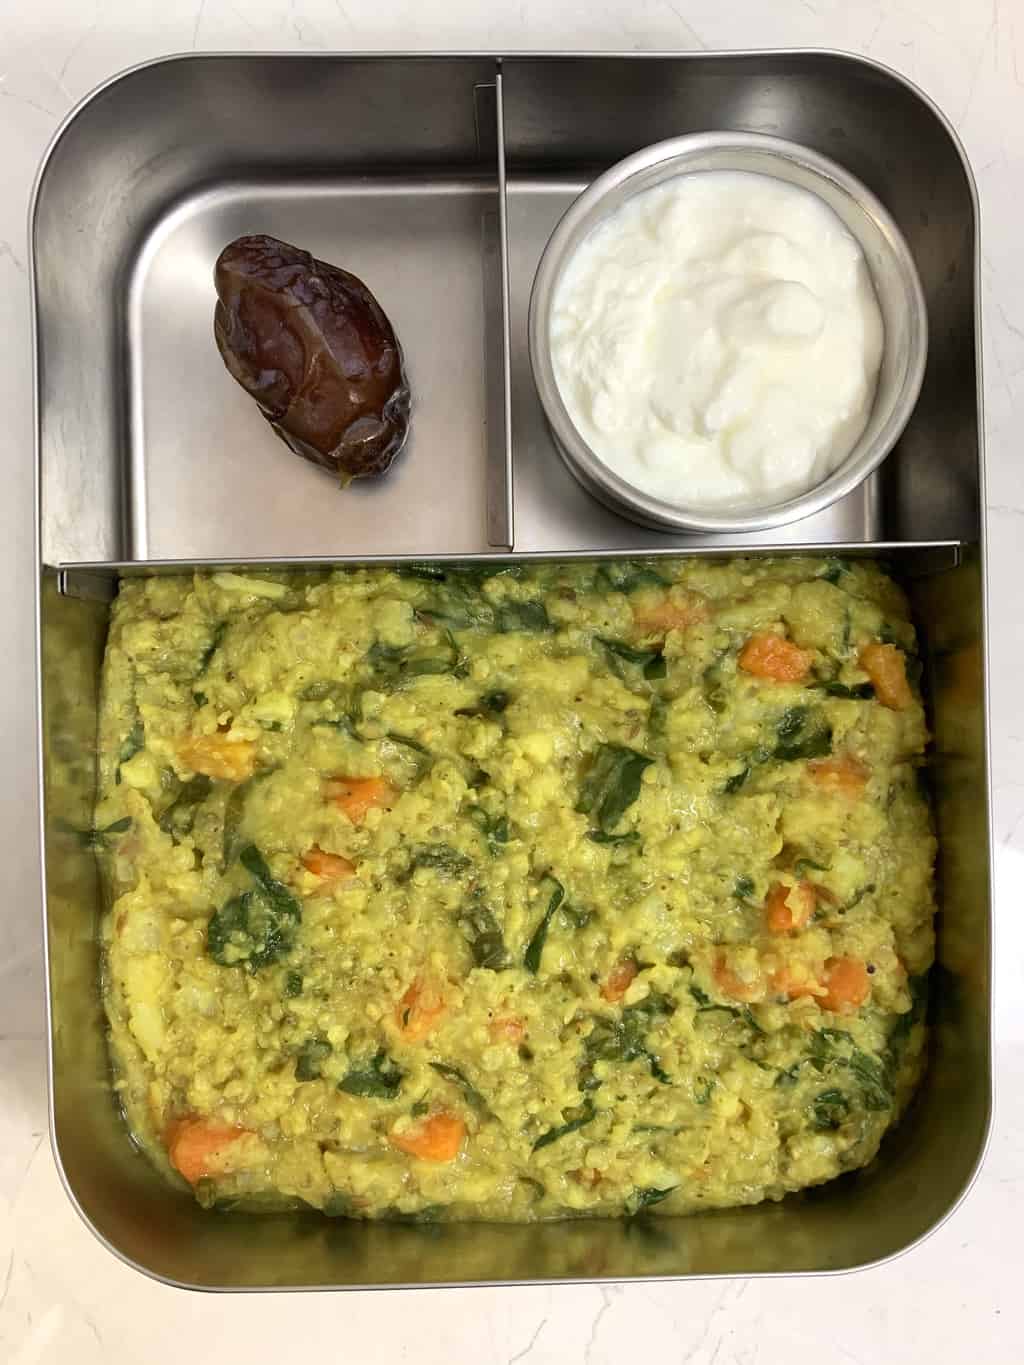 bajre/bajra ki khichdi served in a steel kids lunch box along with yogurt and dates